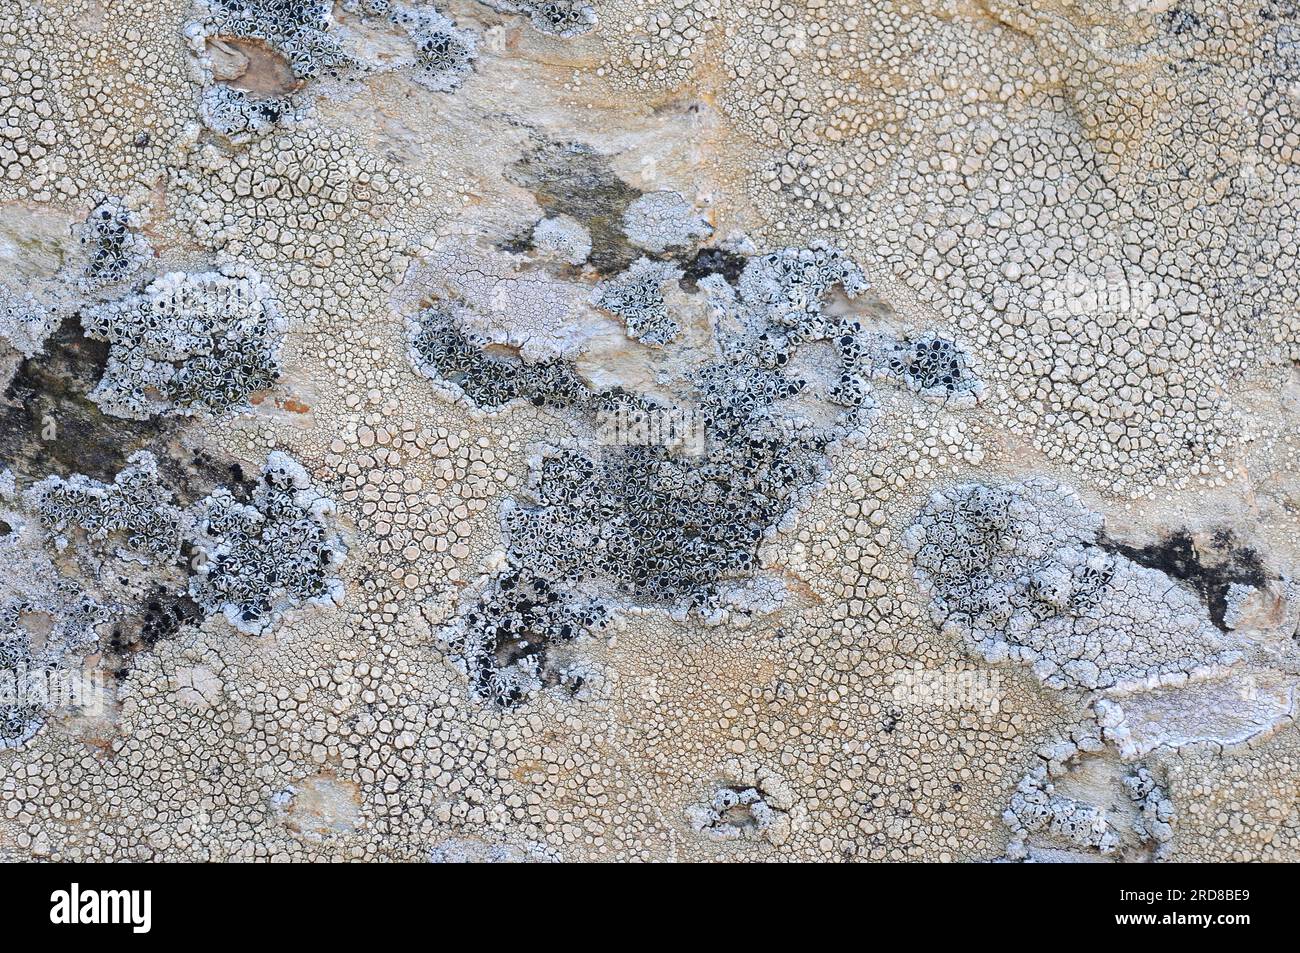 Tephromela atra and Lecanora sp. are two crustoses lichens species. Ascomycota. Mycoblastaceae and lecanoraceae families. This photo was taken in Alt Stock Photo